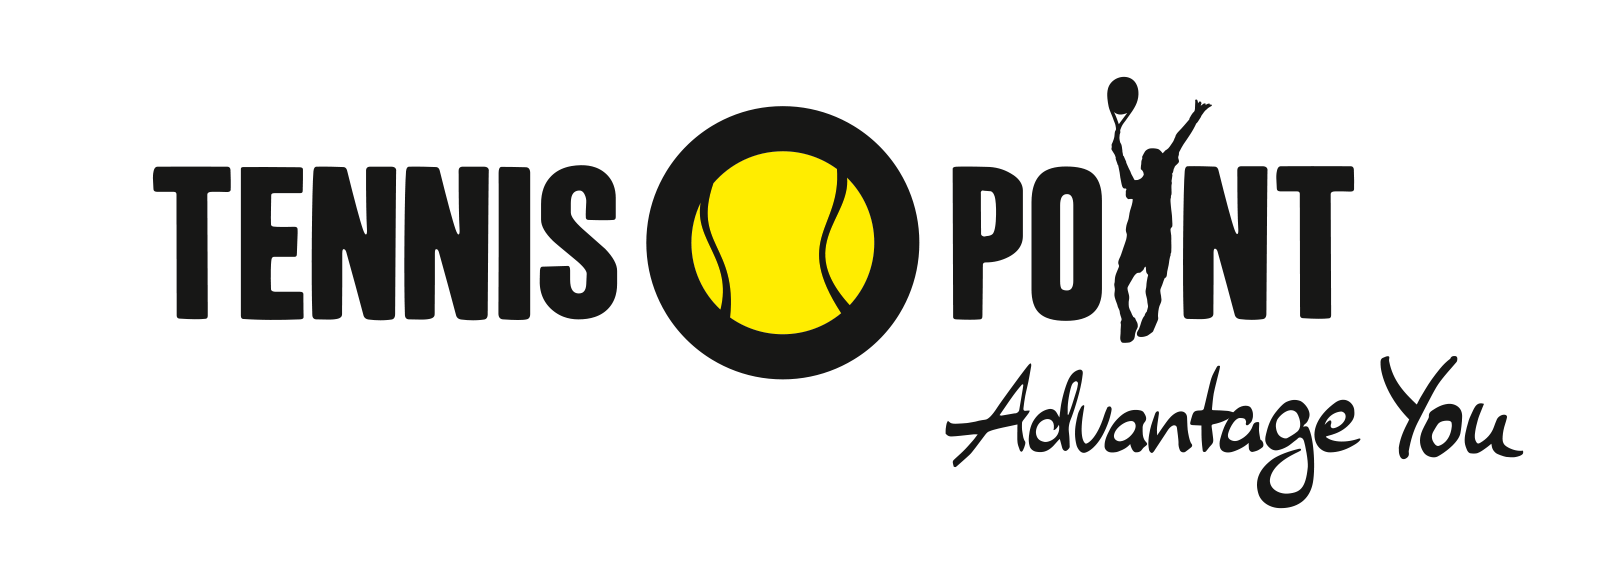 Tennis Point Discount Code